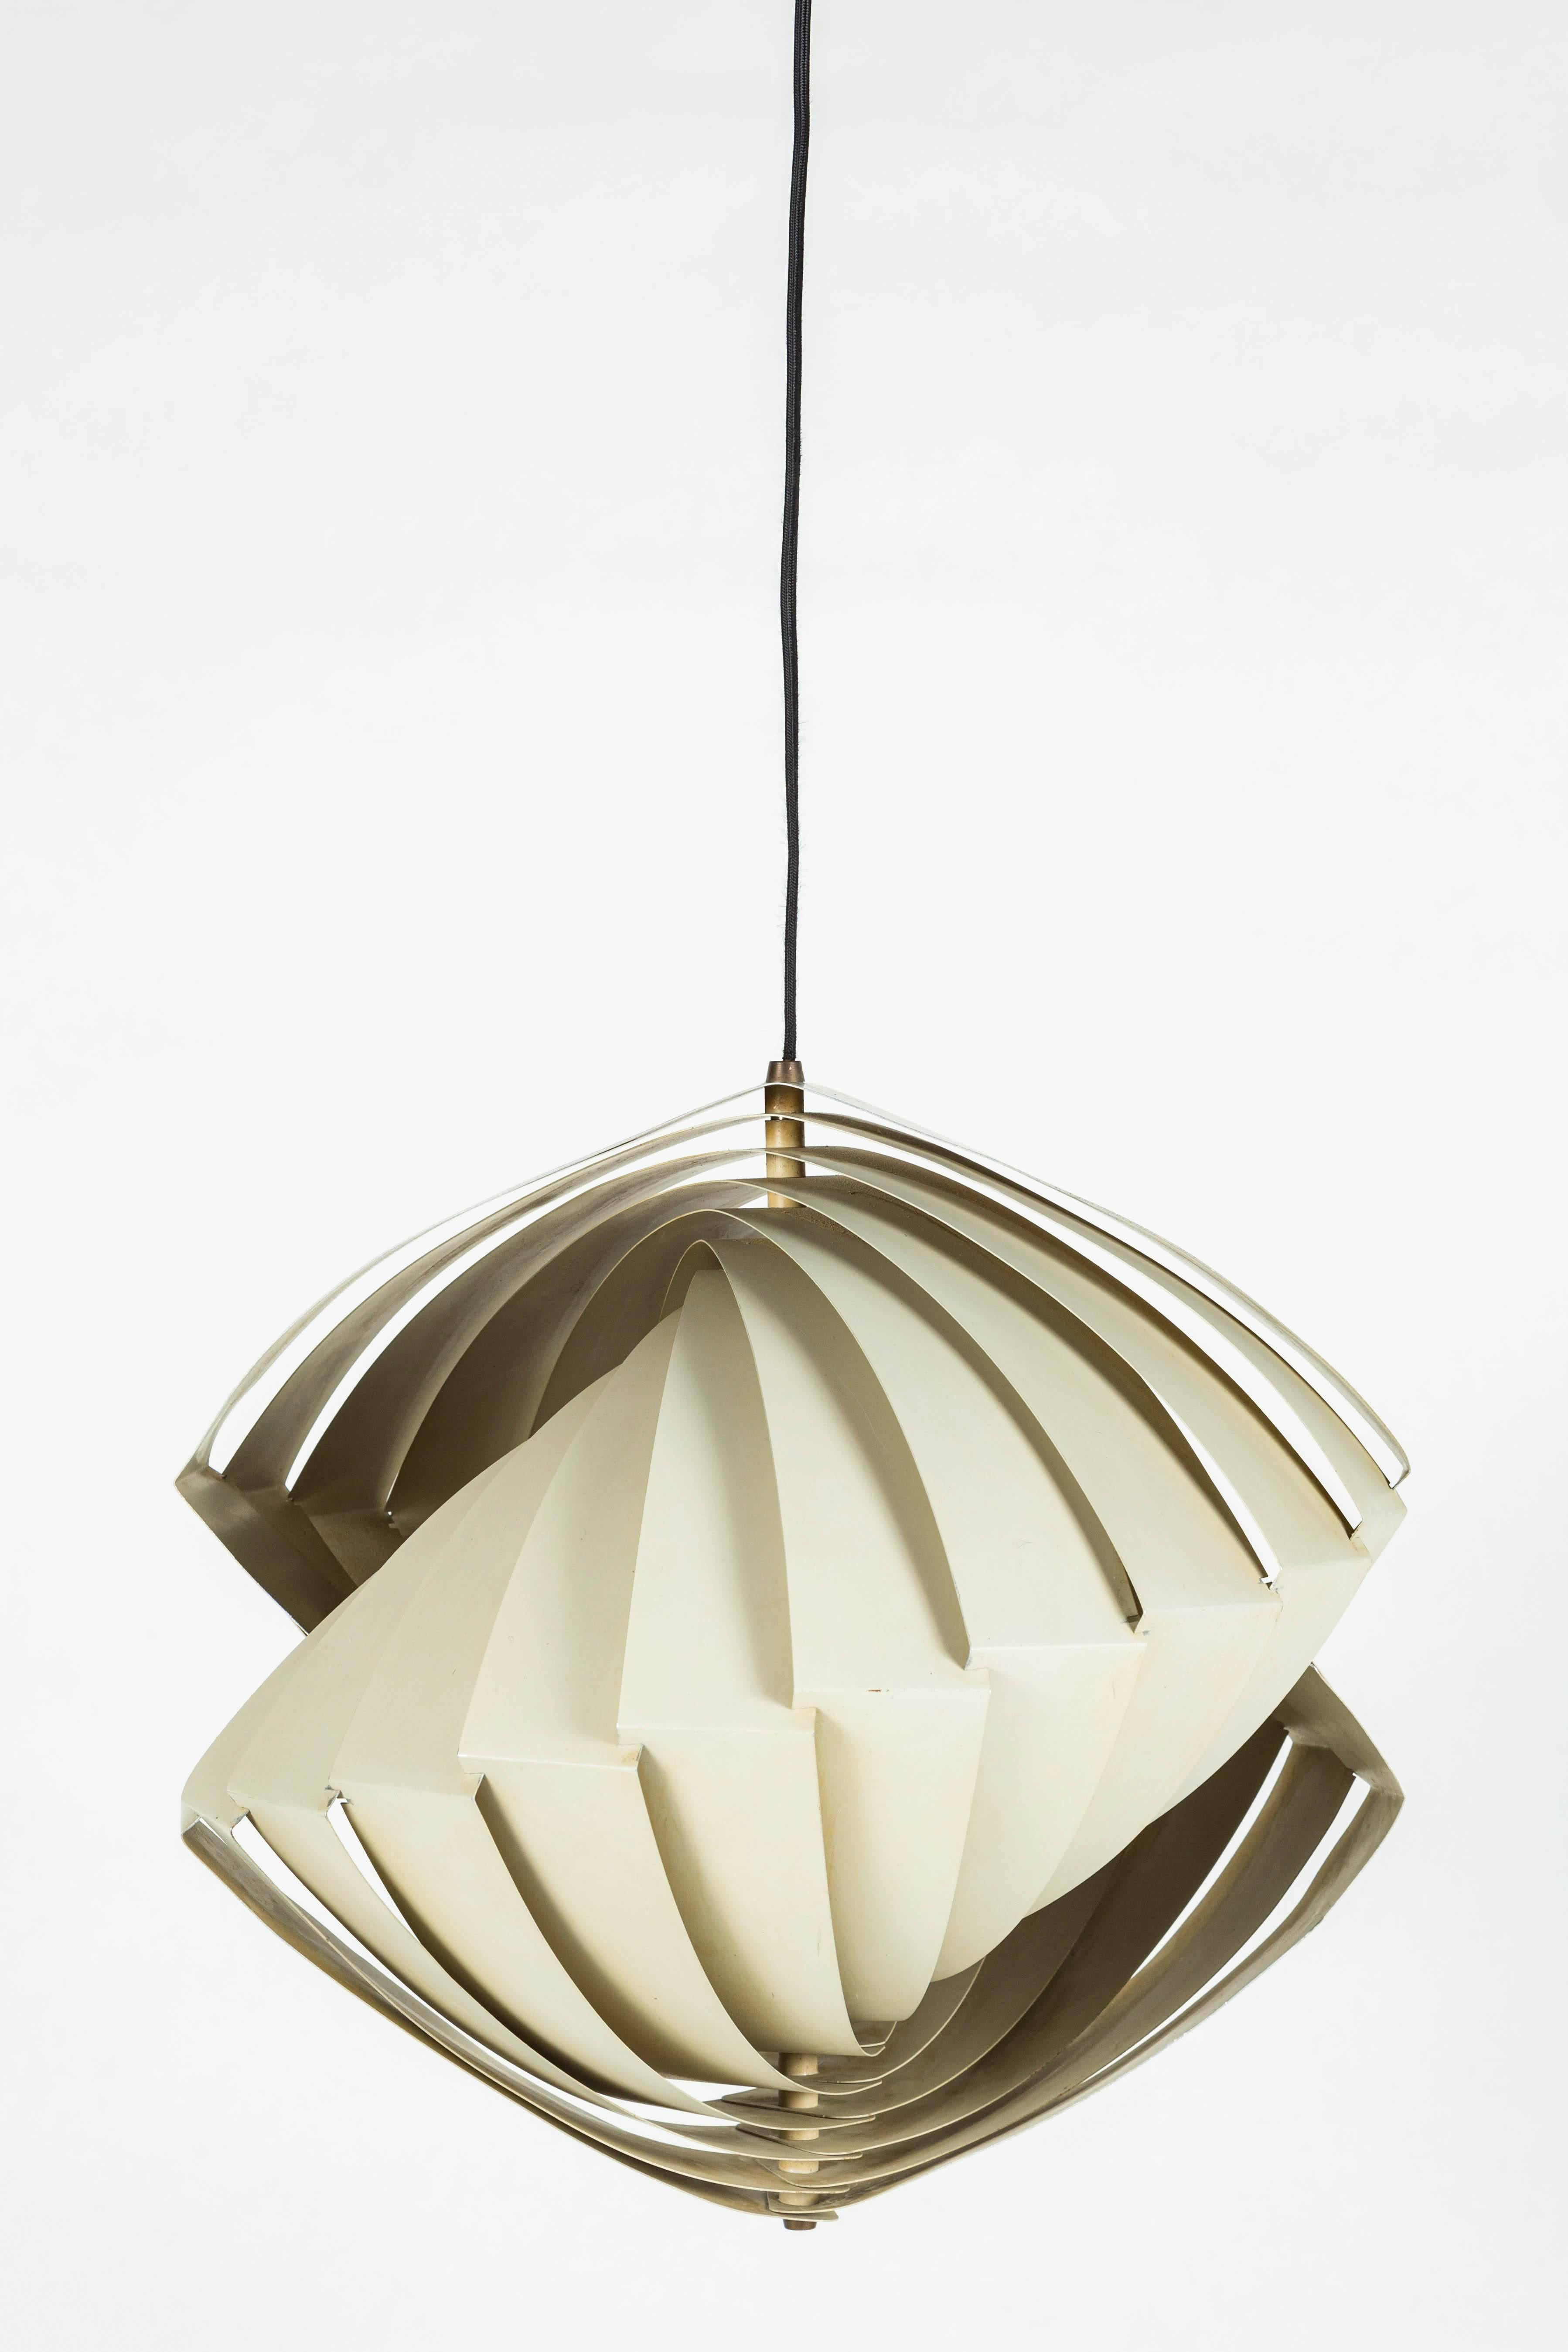 Seashell lamp by Louis Weisdorf. Model 